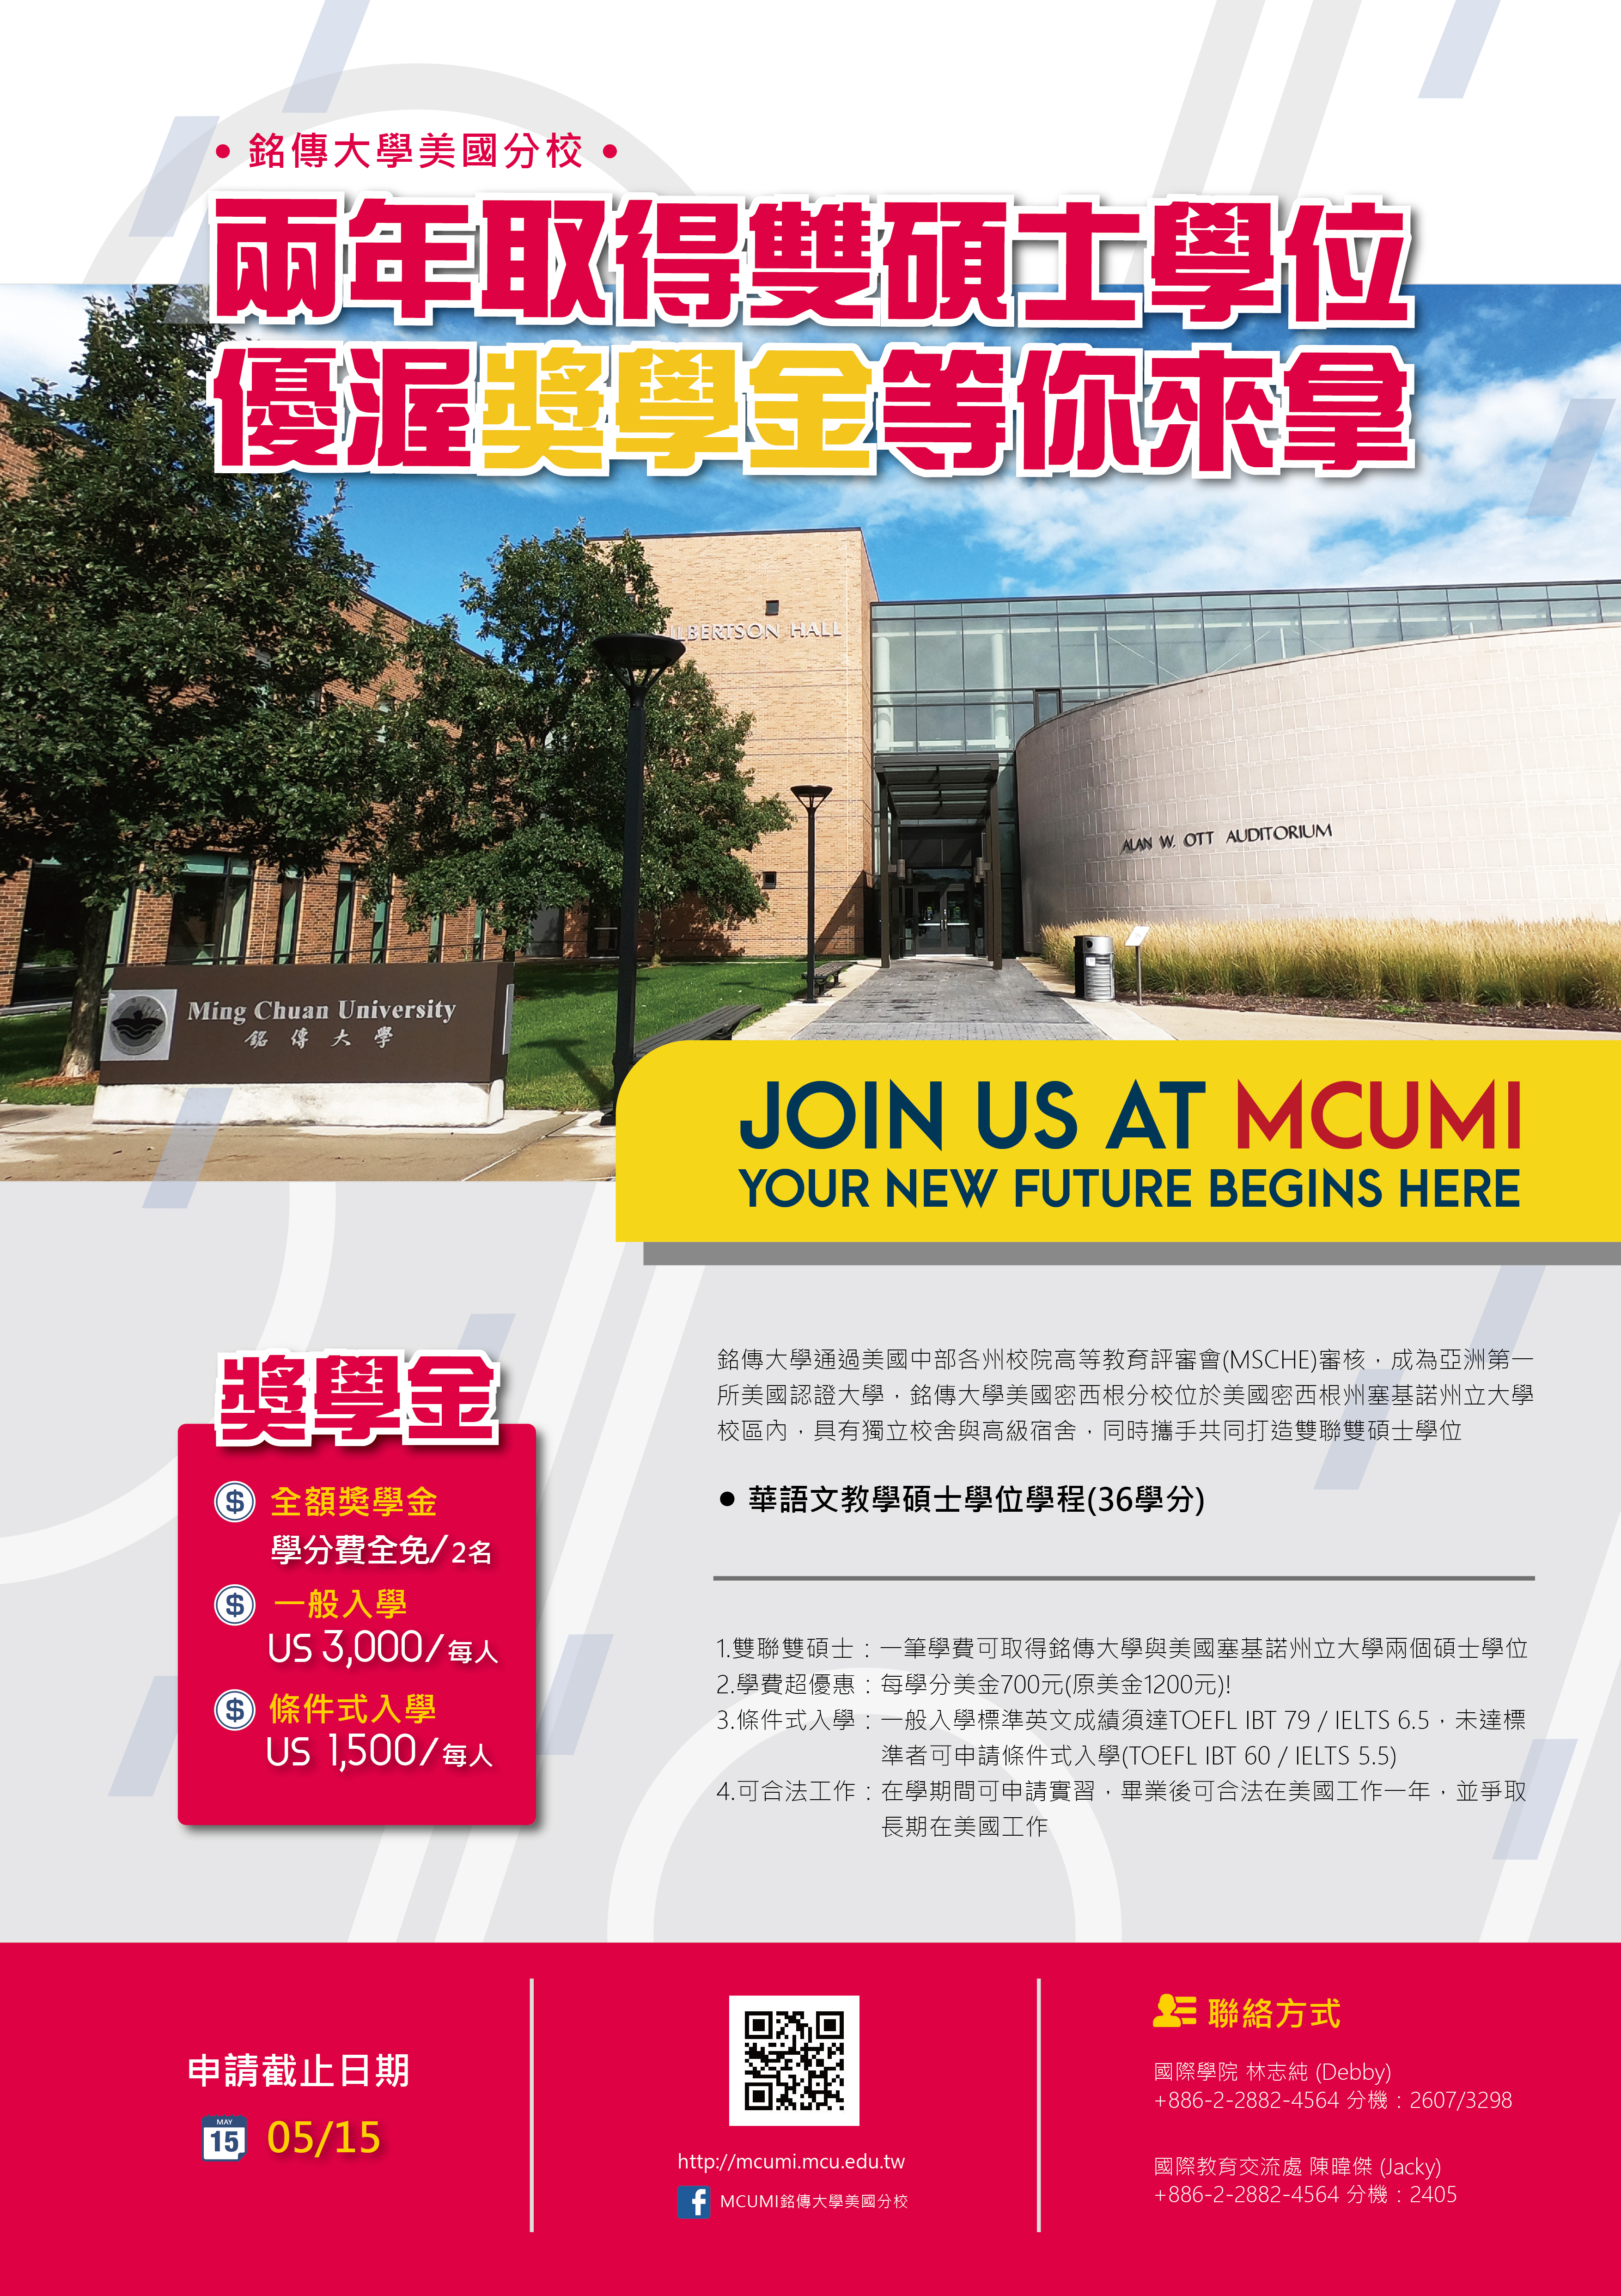 Join us at MCU-MI on 2020 Fall